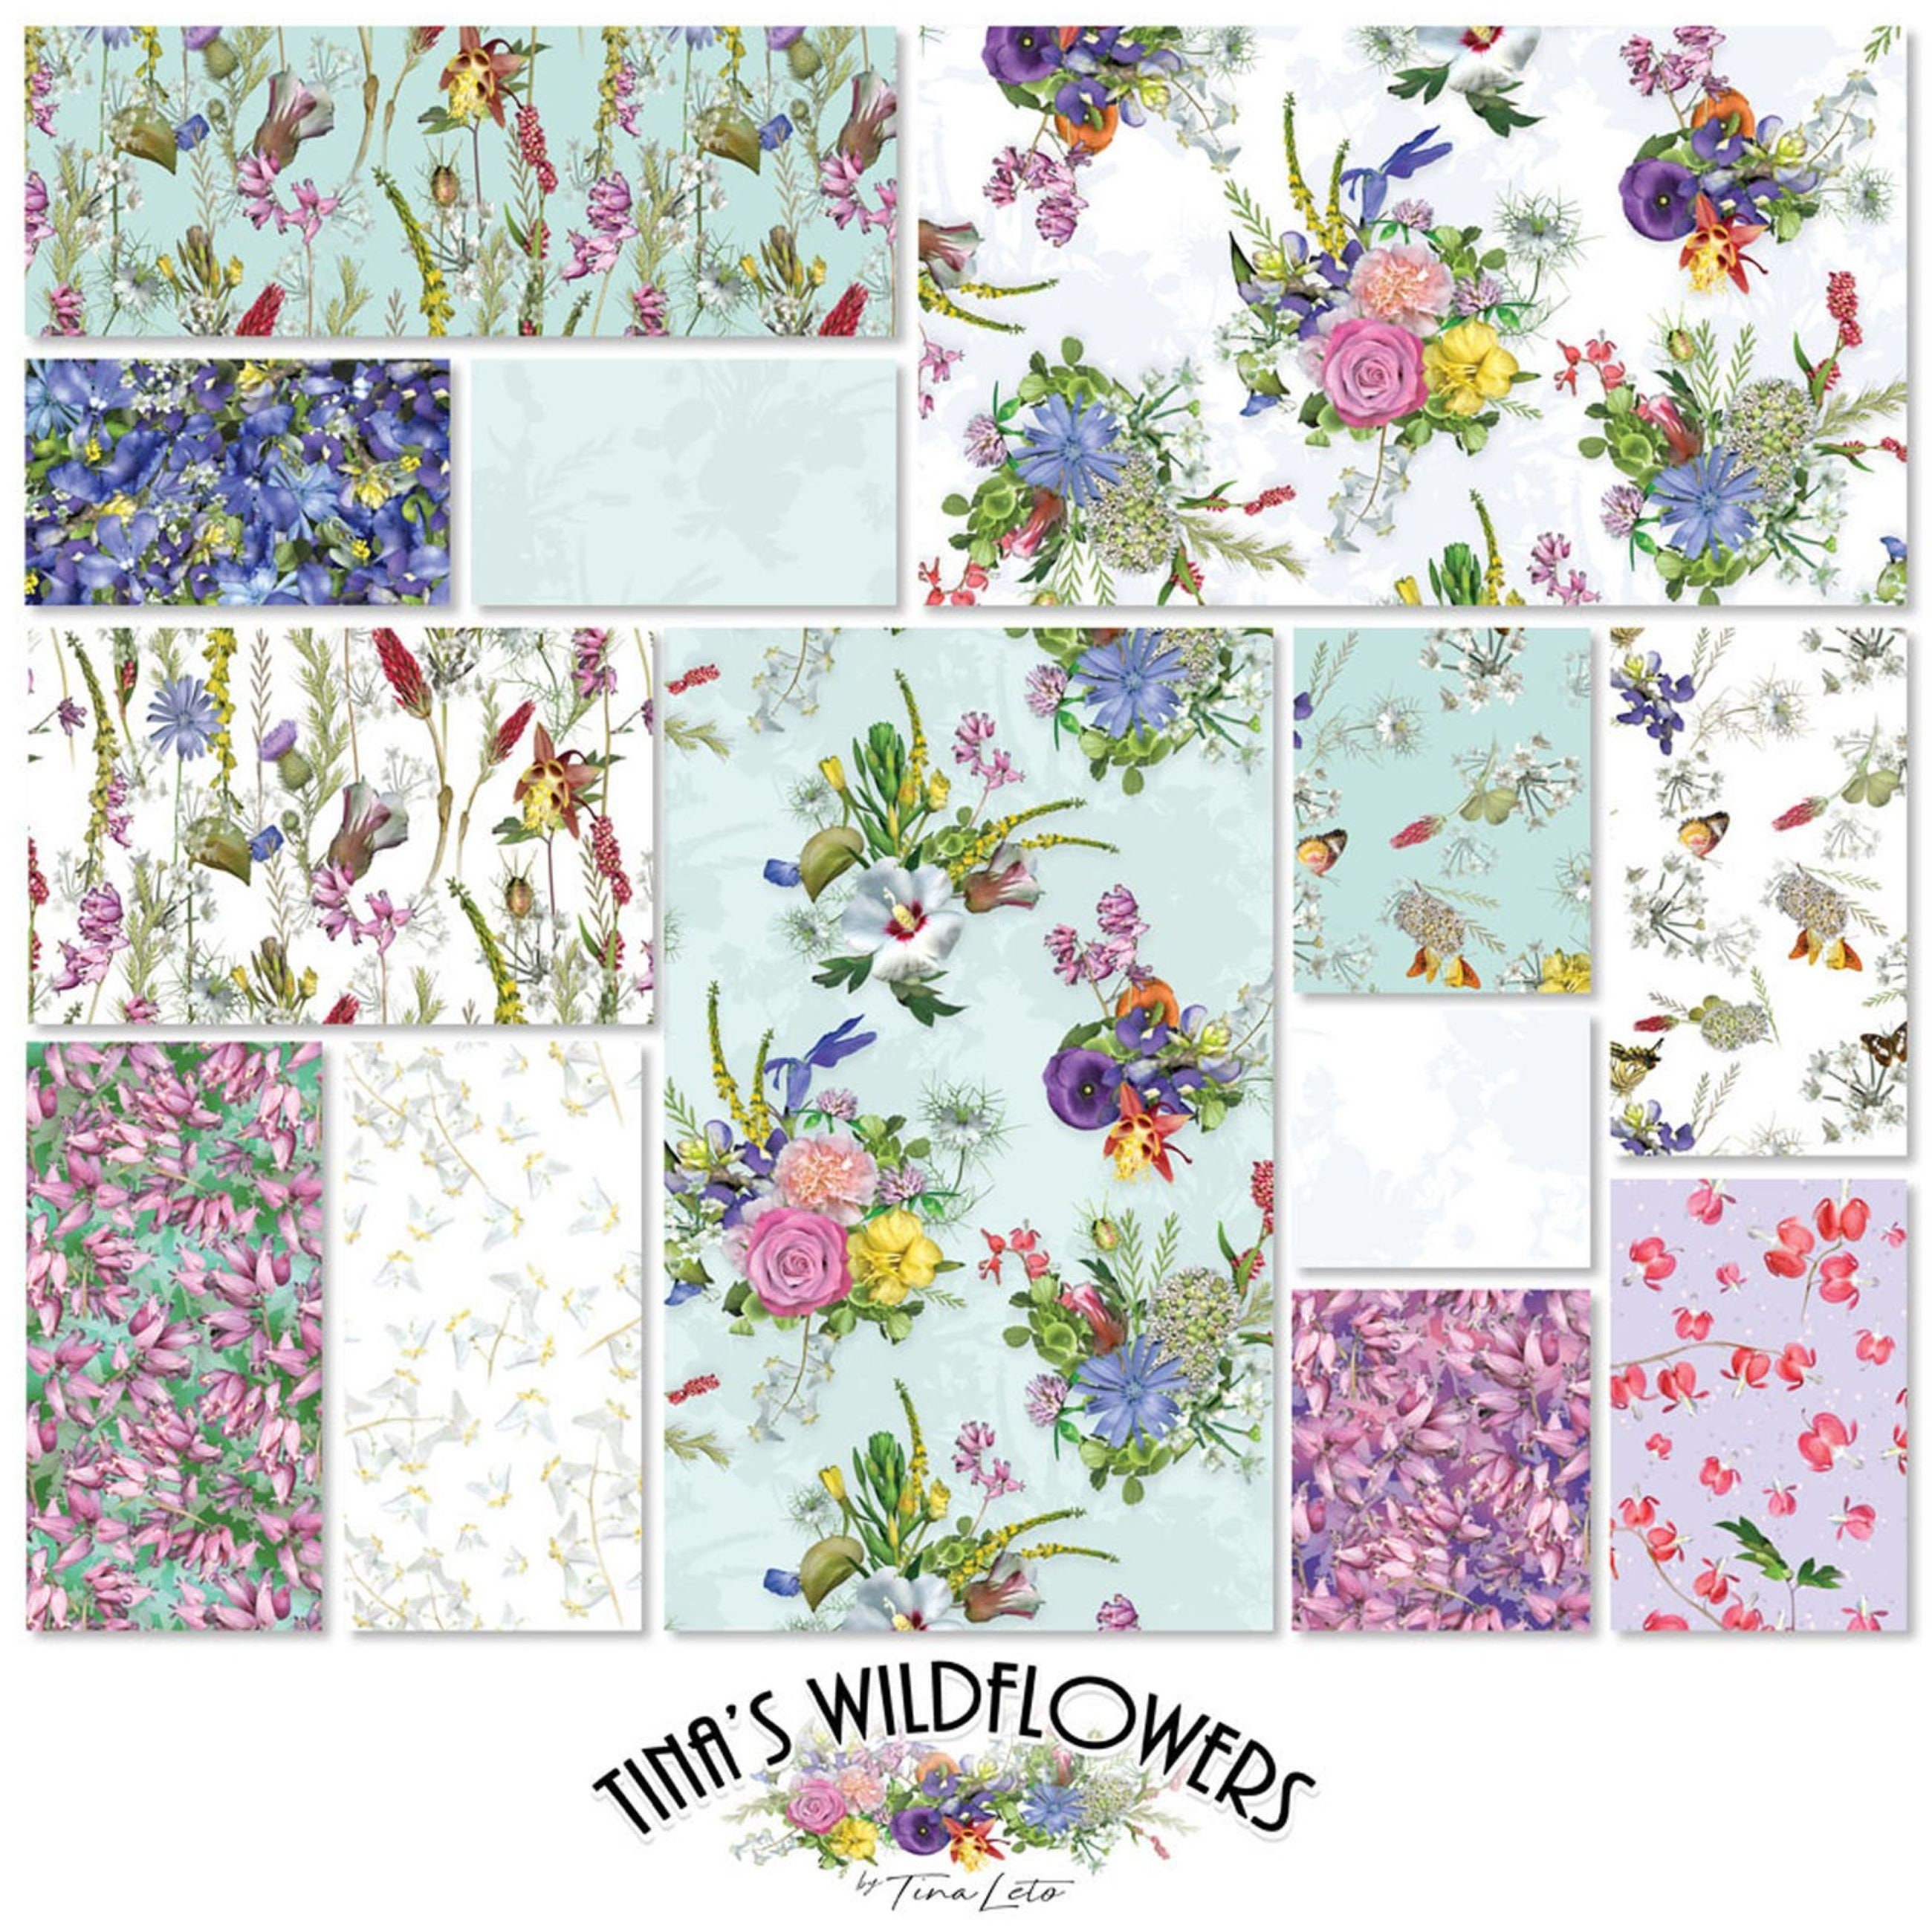 Tina's Wildflowers Precut 10 inch Cotton Fabric Squares